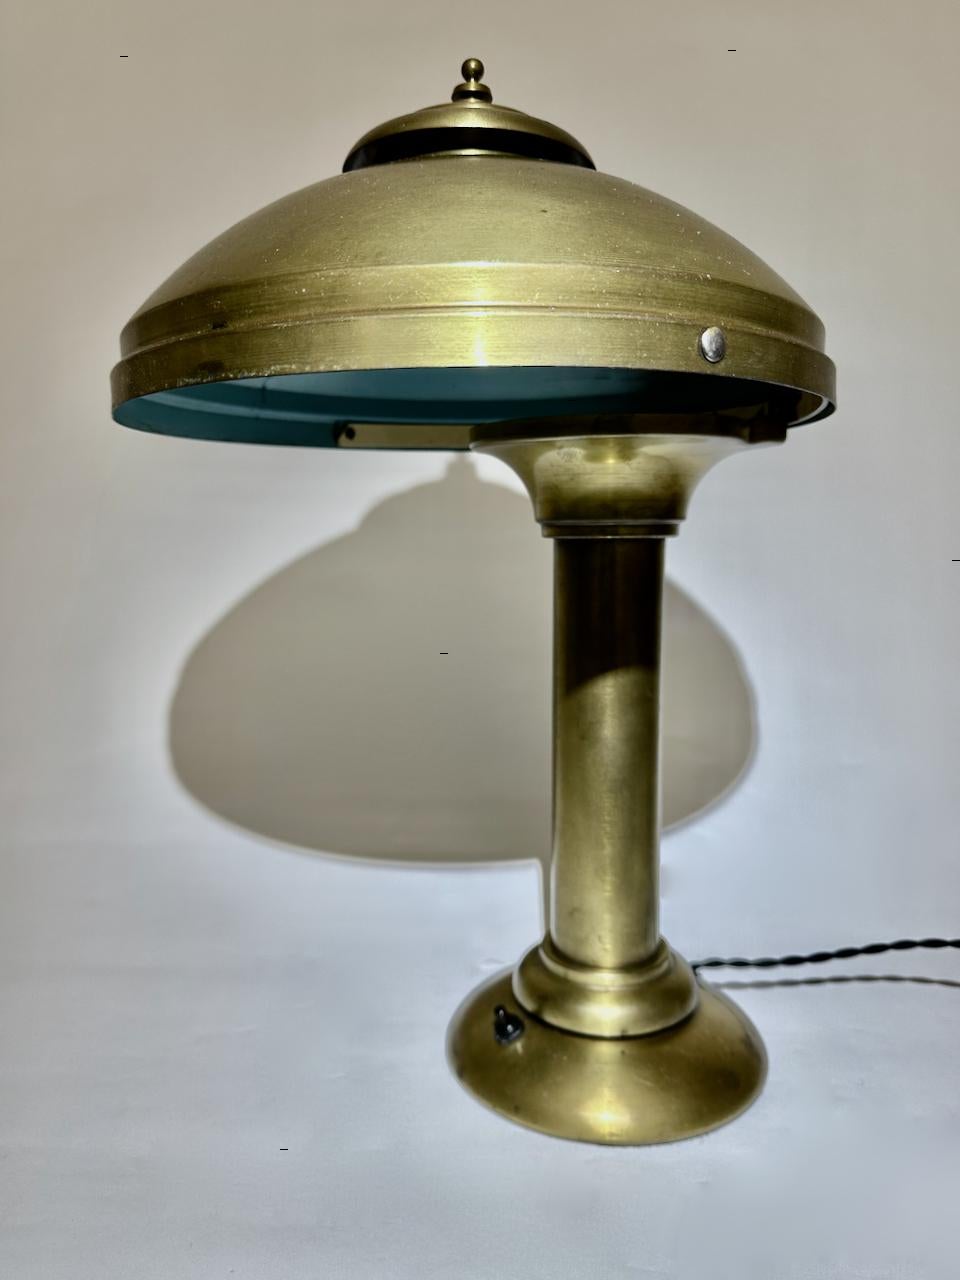 Fairies Mfg. Co. Brass Cantilever Desk Lamp, 1920s For Sale 4